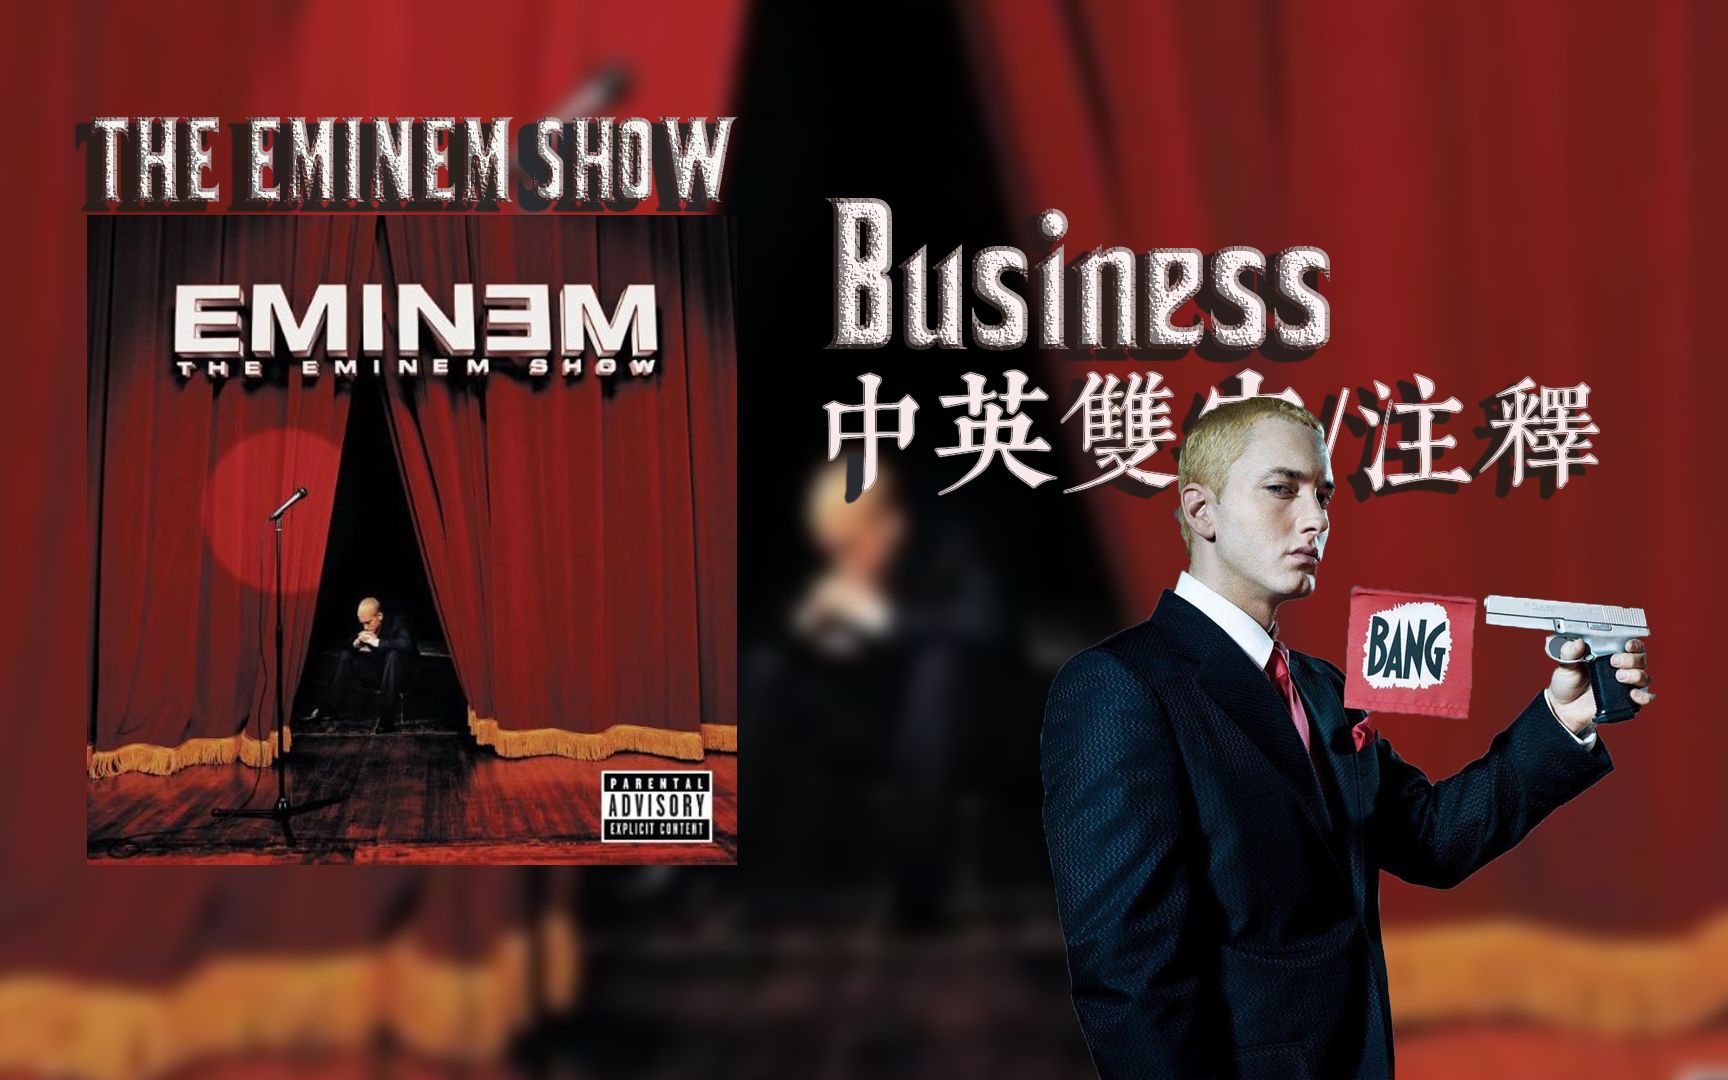 【Eminem/中英双字/注解】 Business——说唱界的蝙蝠侠与罗宾【The Eminem Show】